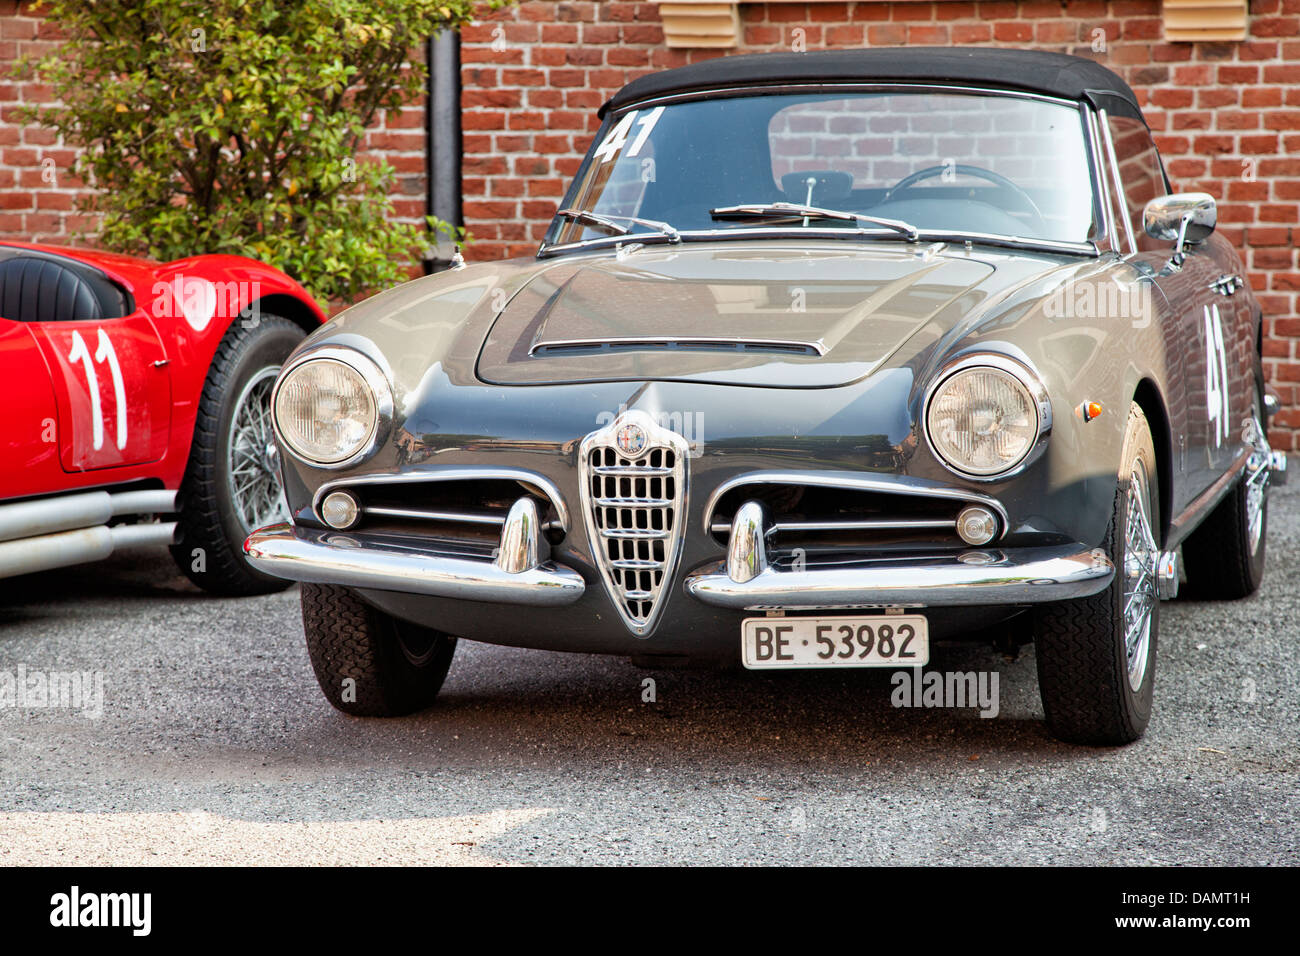 1963 Alfa Romeo Giulietta dans un spectacle Banque D'Images